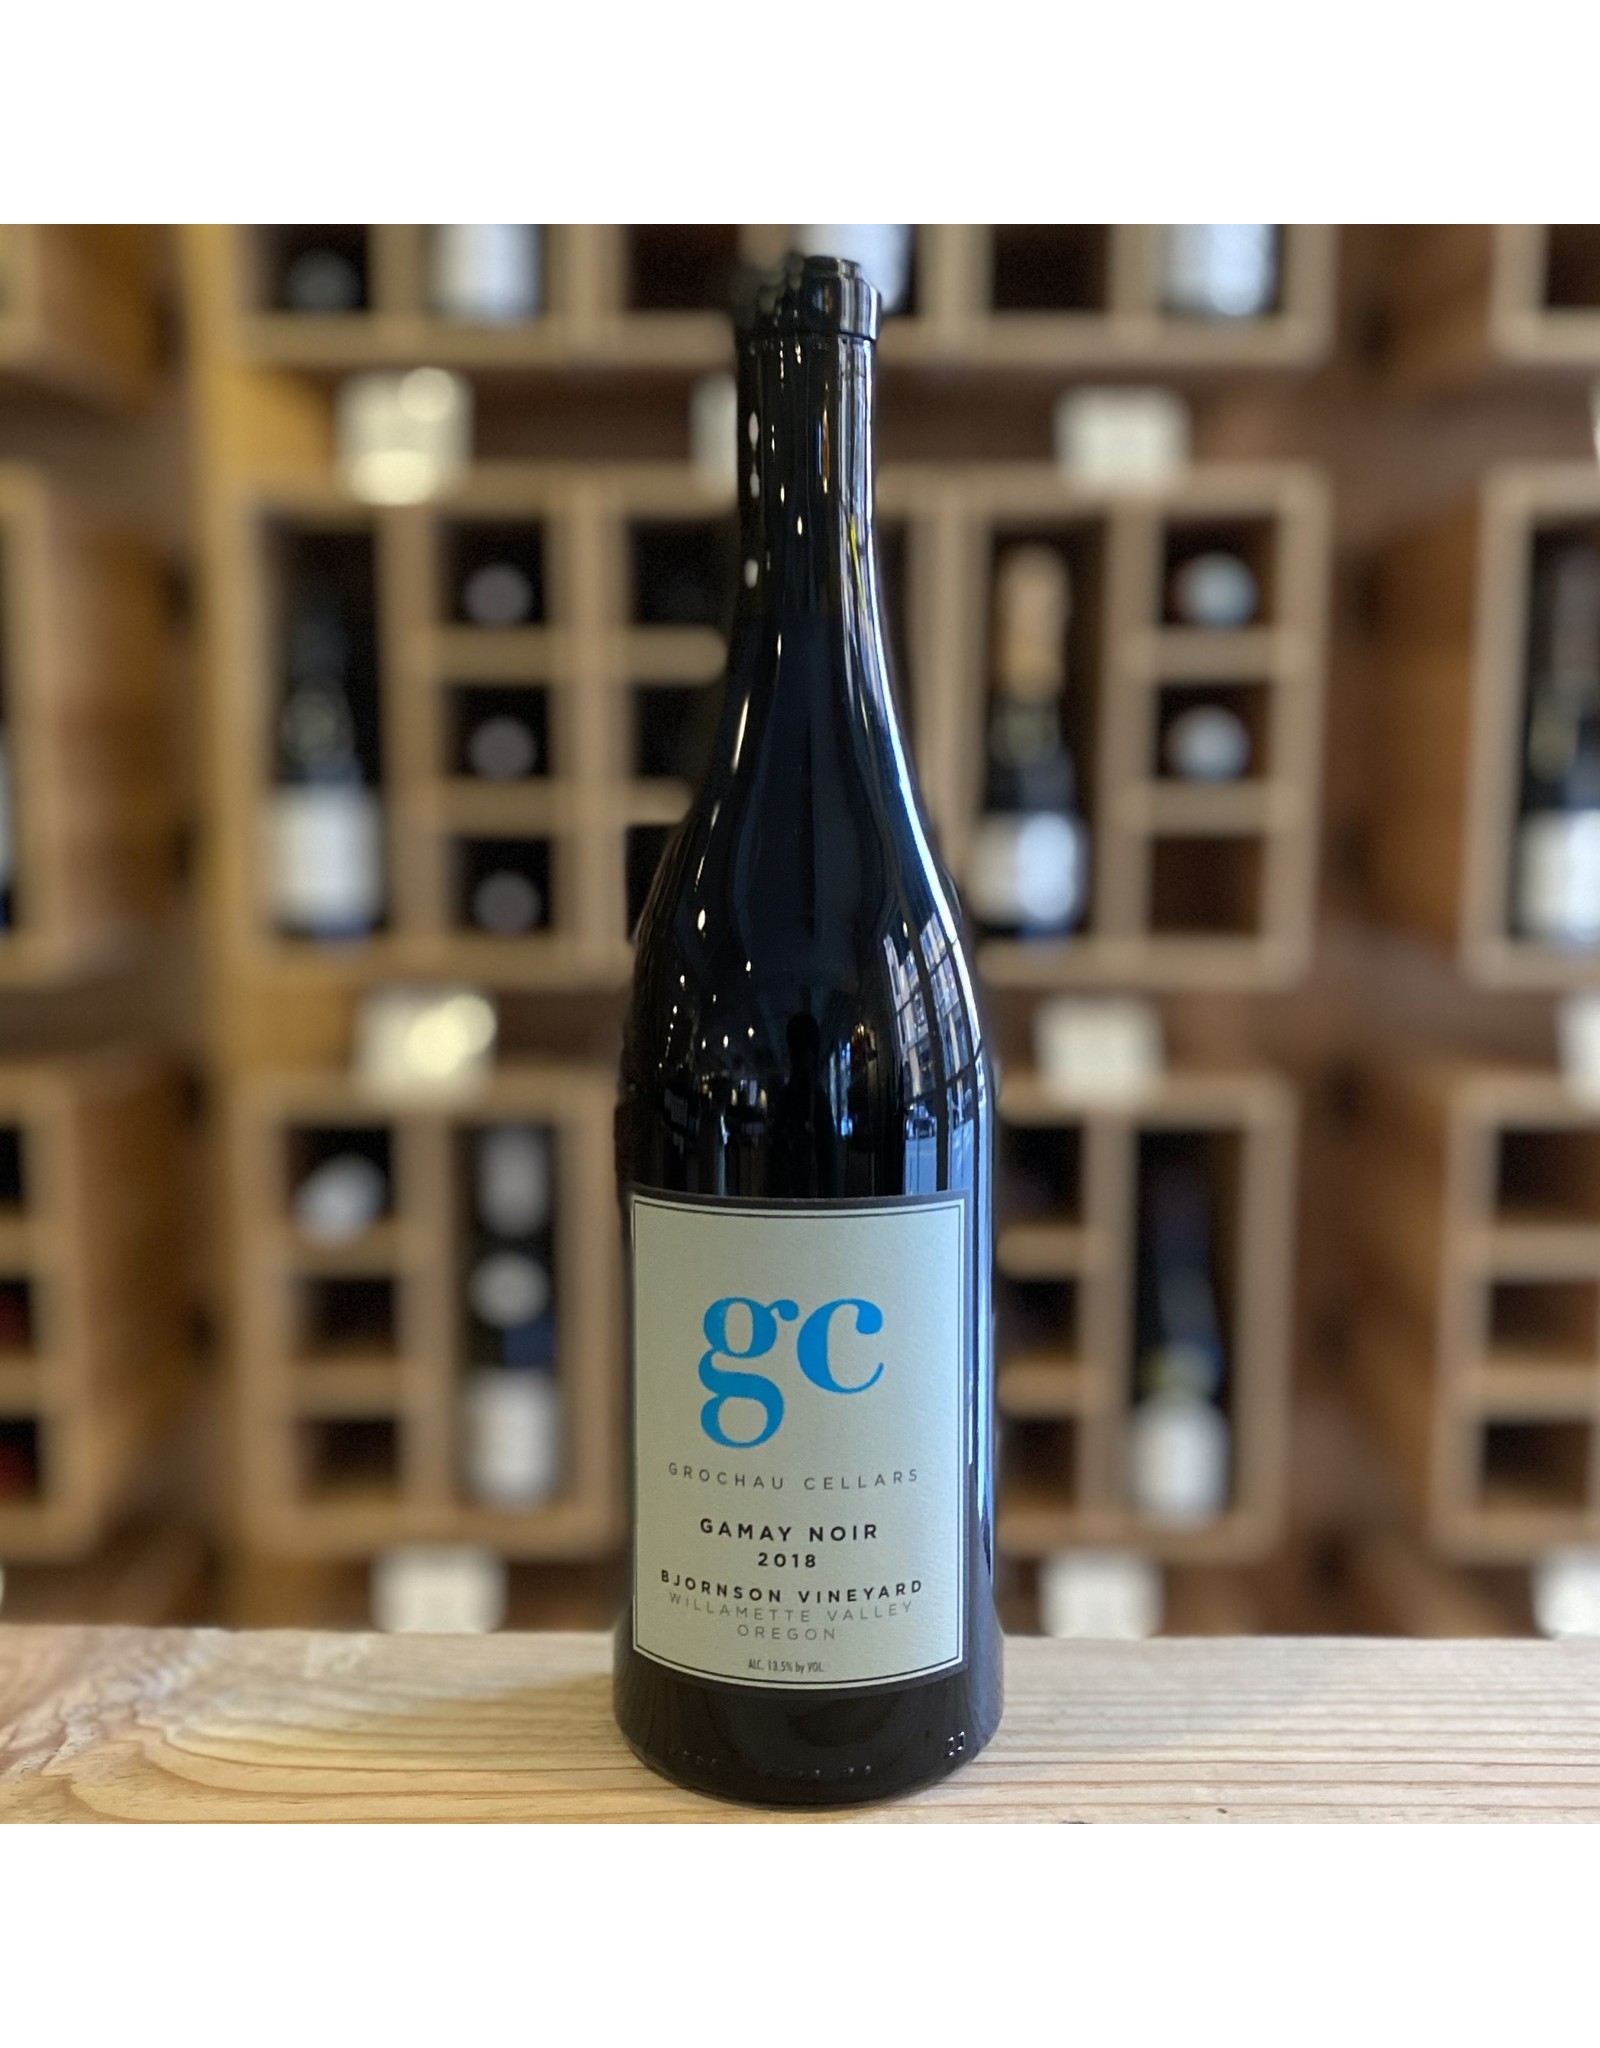 Oregon Grochau Cellars "Bjornson Vineyard" Gamay Noir 2018 - Willamette Valley, Oregon